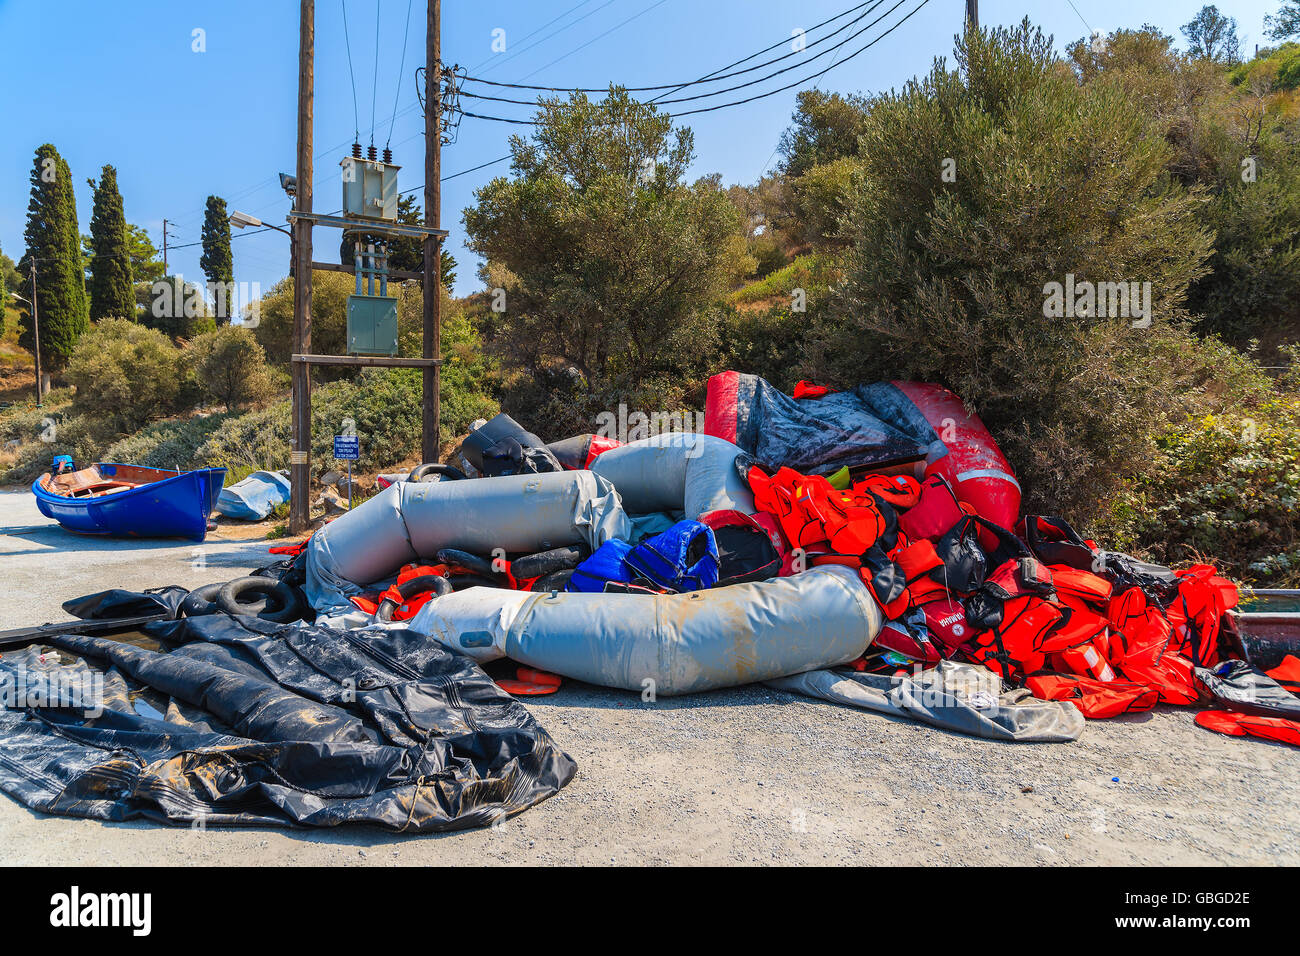 SAMOS ISLAND, GREECE - SEP 20, 2015: inflatable boats and life jackets on shore of Samos island, Greece. Refugees arrive here fr Stock Photo